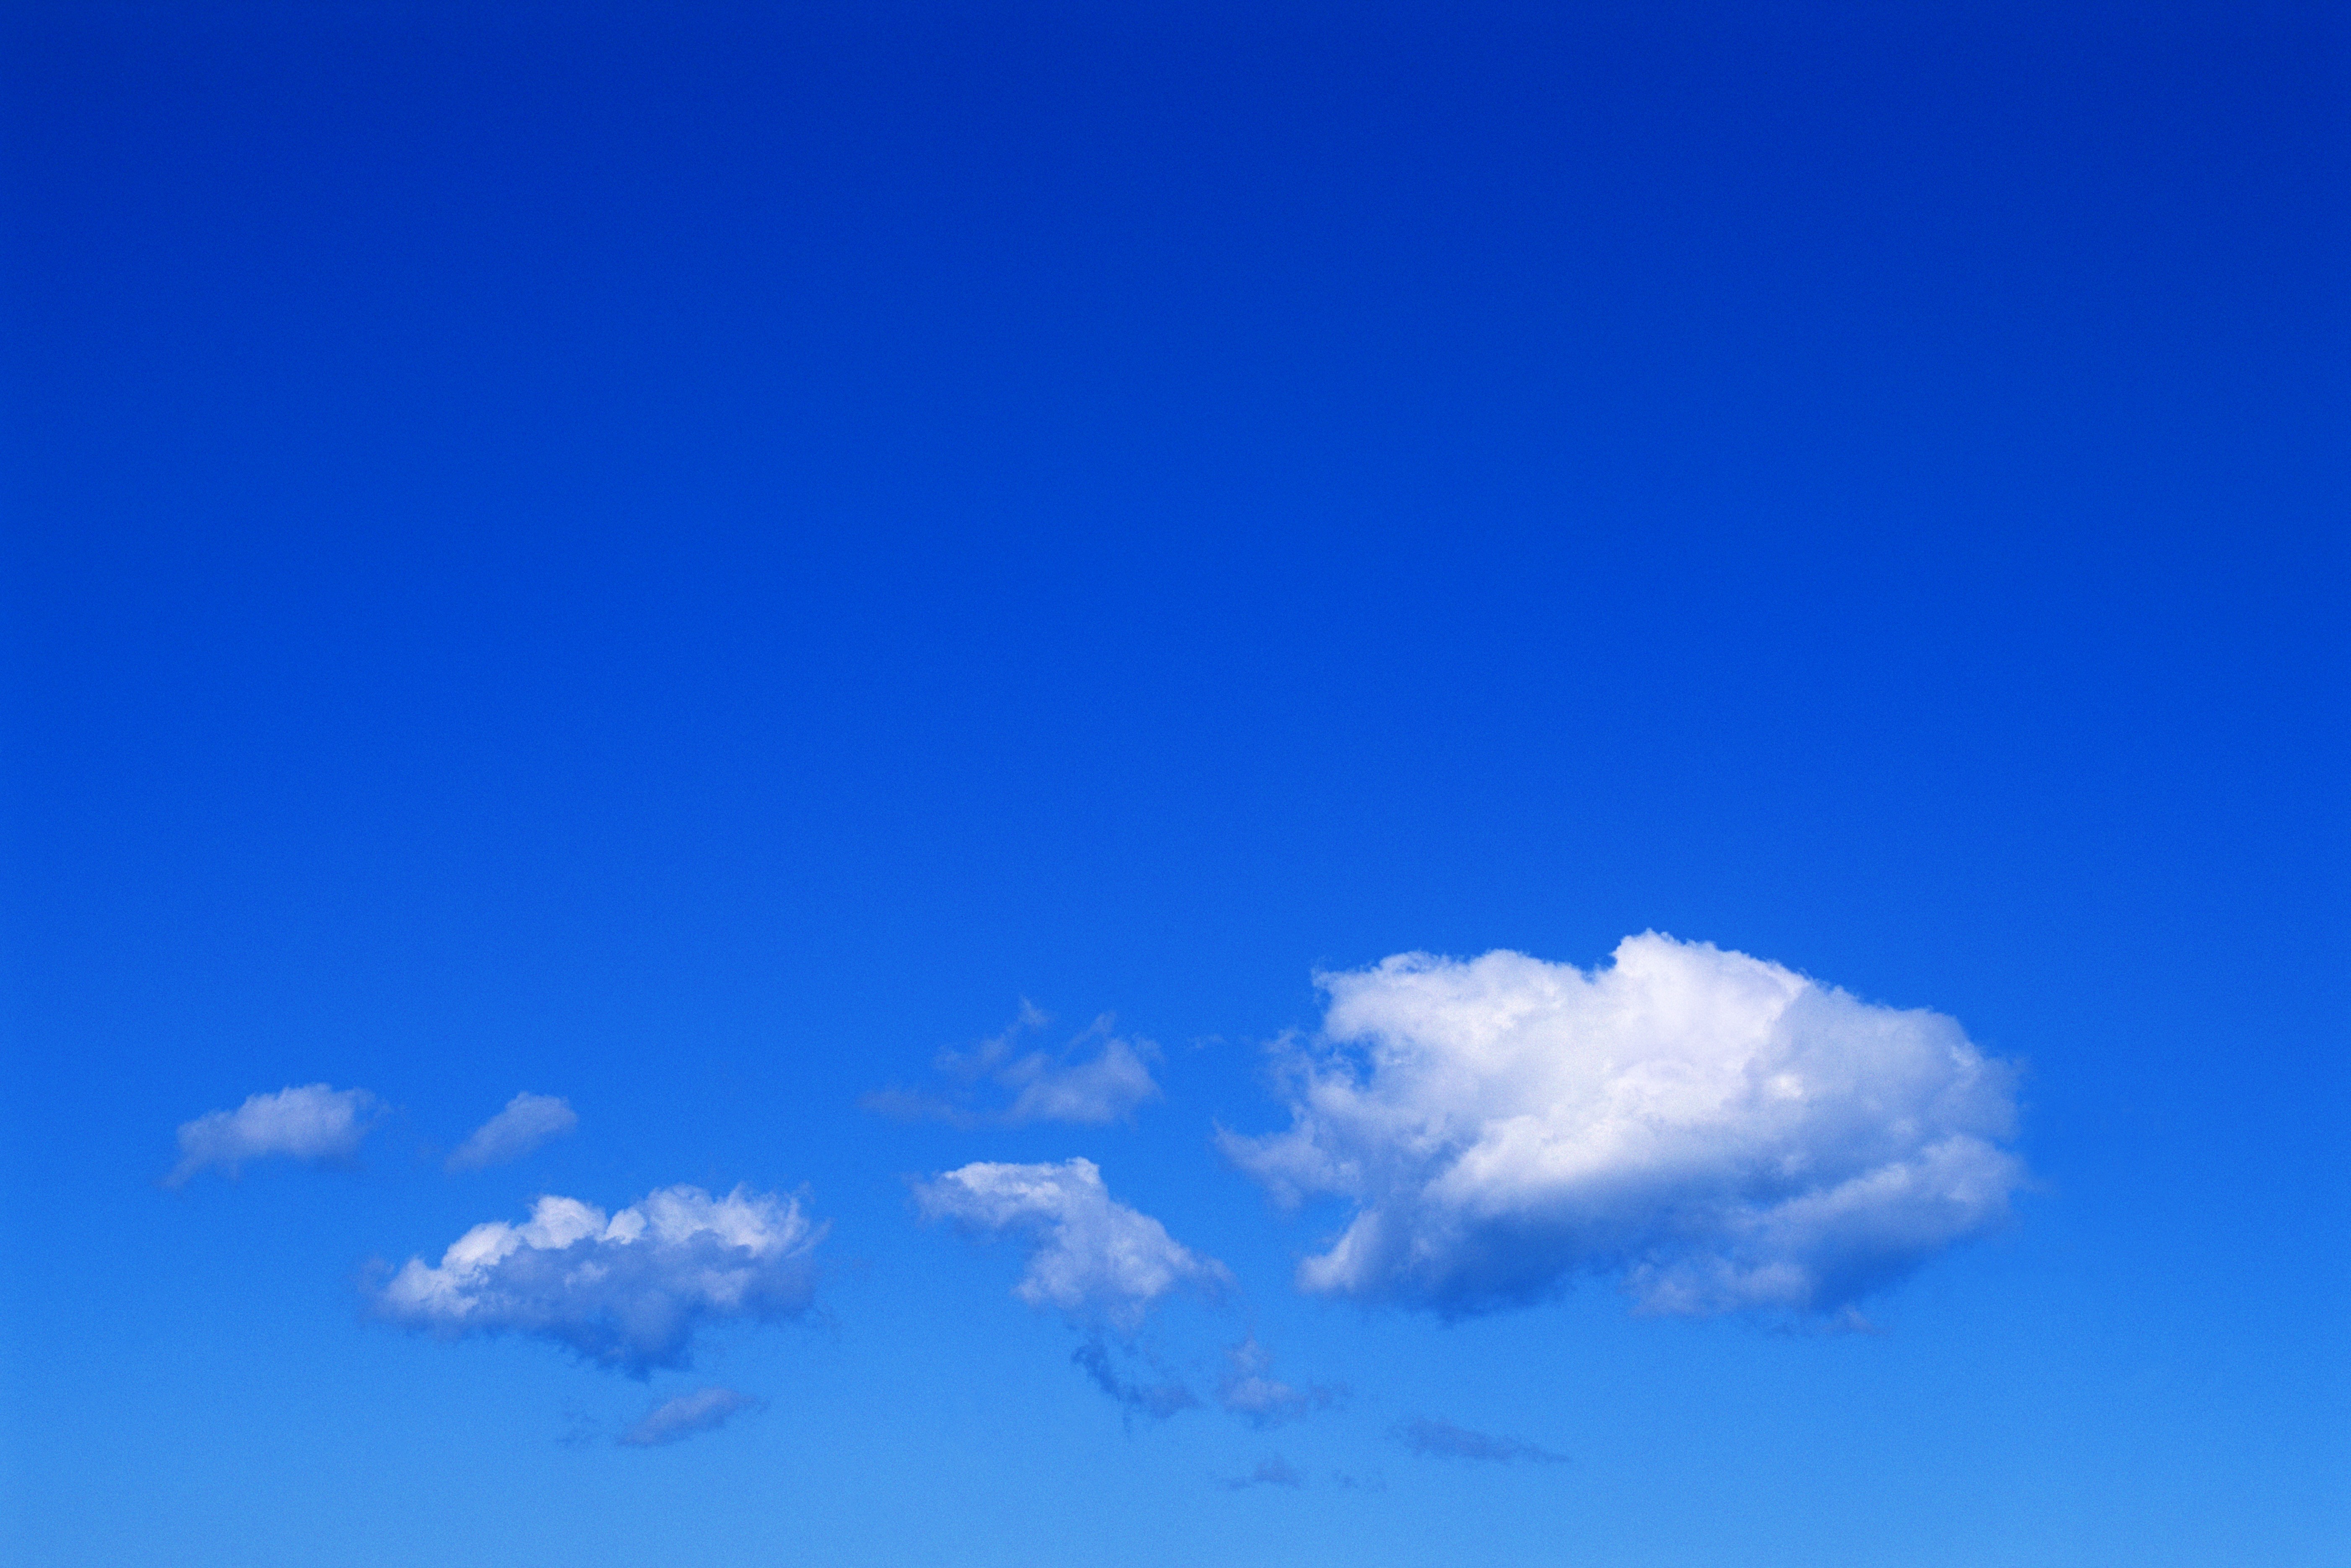 По бирюзовому небосклону бесконечно. Синее небо. Голубое небо. Безоблачное небо. Синее небо с облаками.